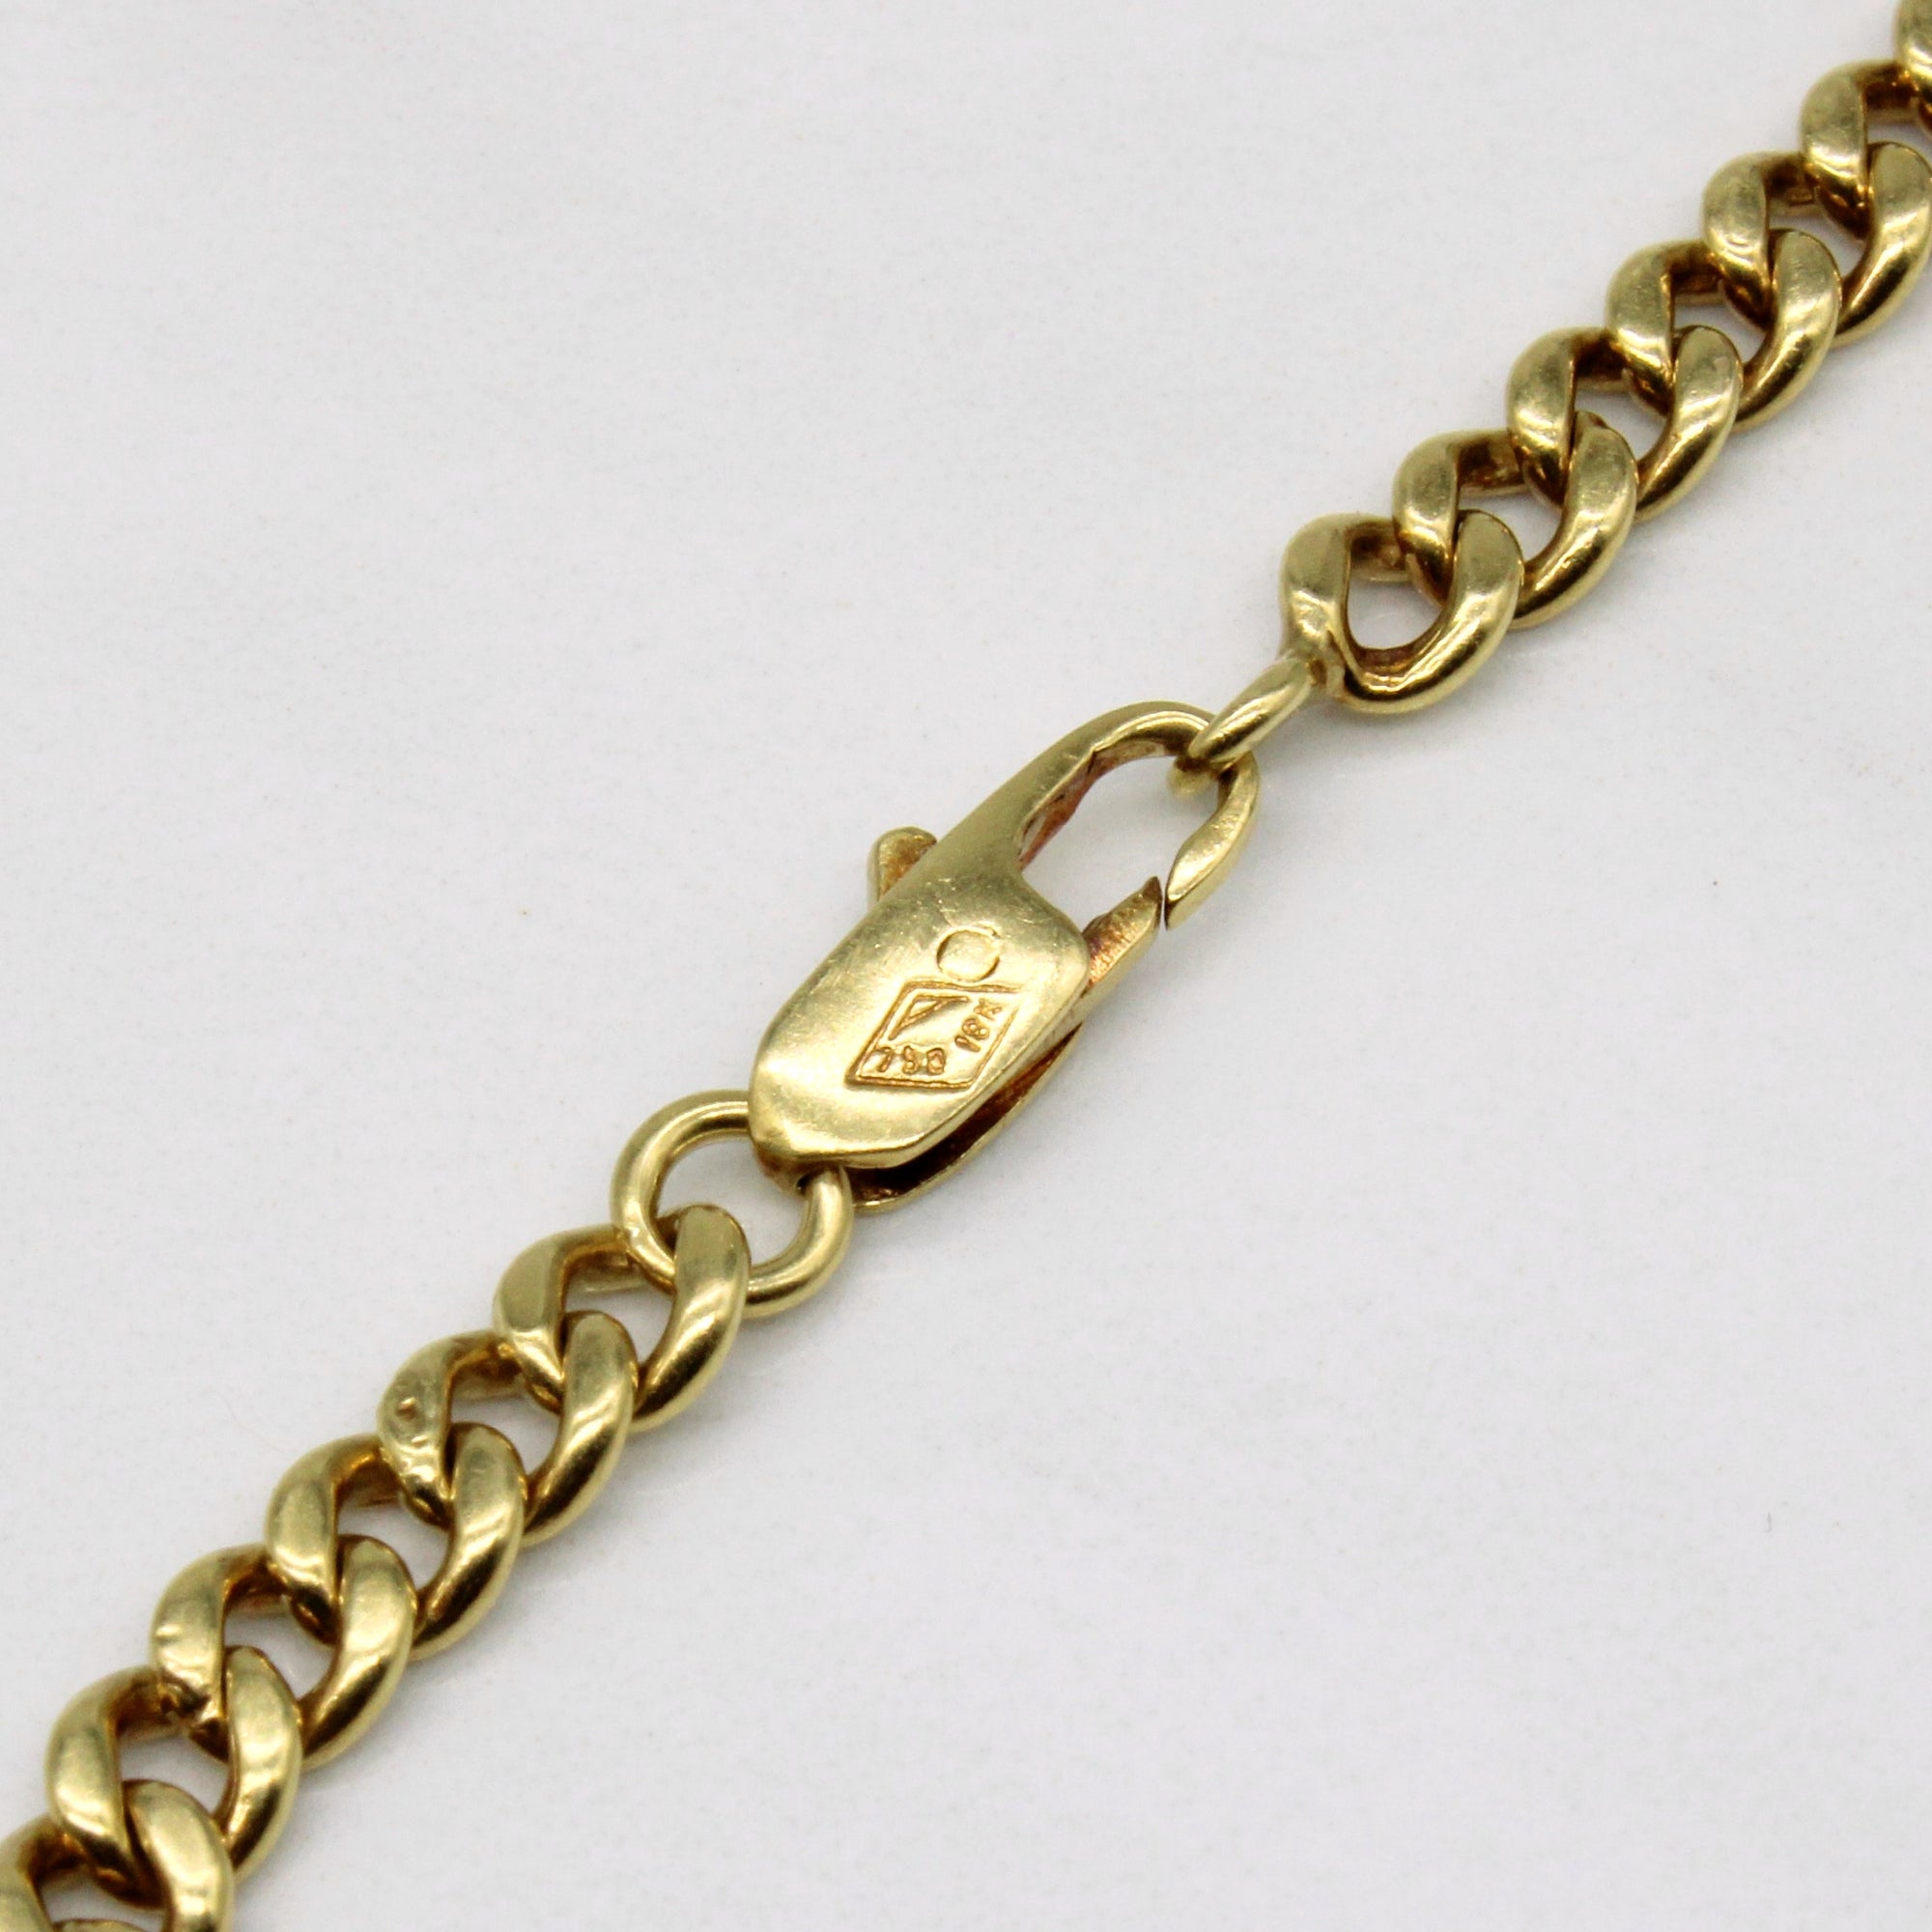 18k Yellow Gold Curb Link Bracelet | 8.25